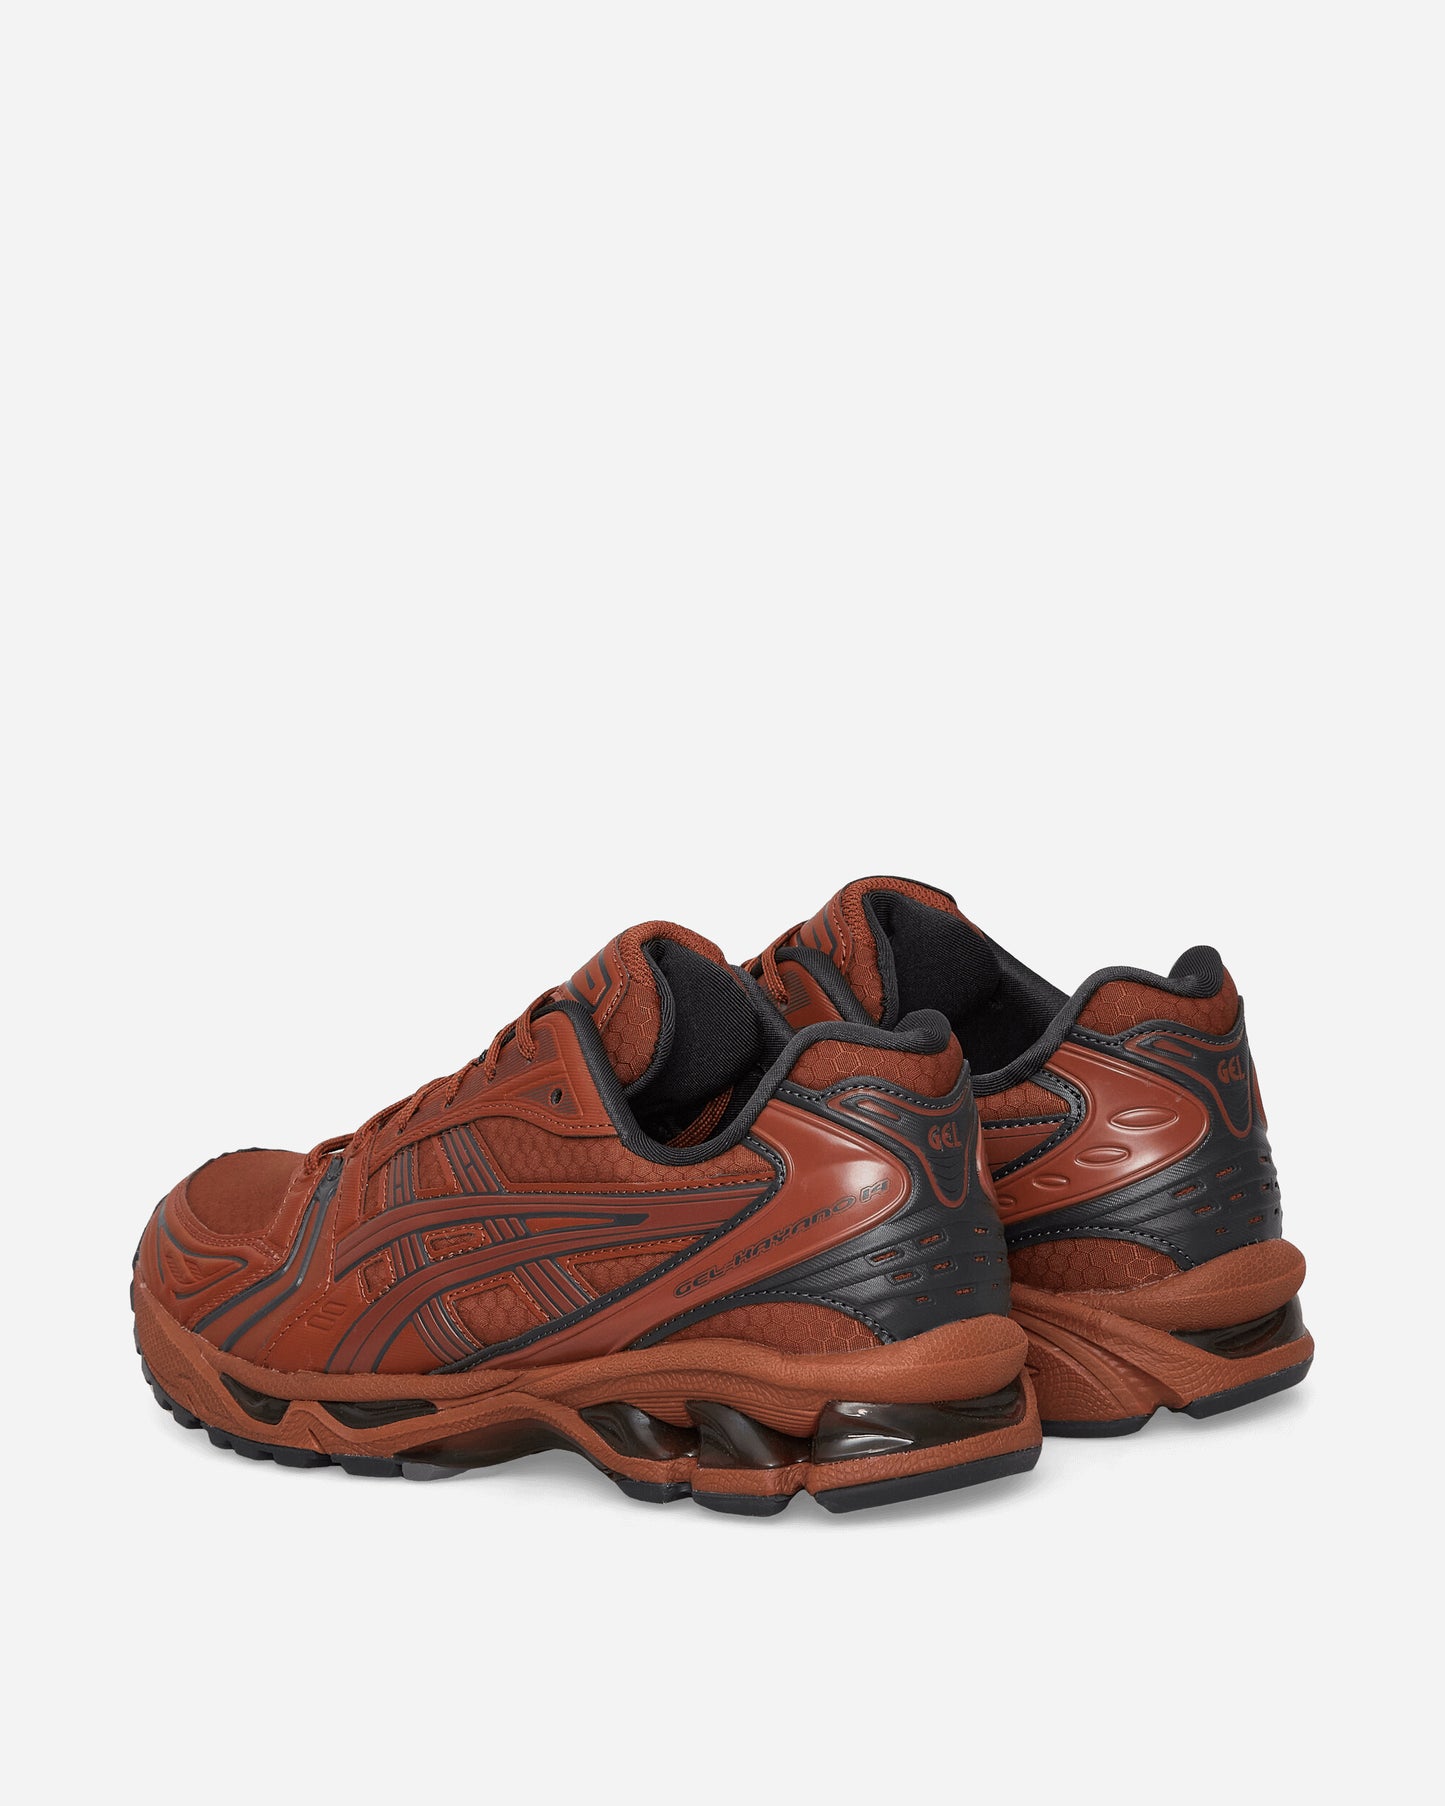 Asics Gel-Kayano 14 Rusty Brown/Graphite Grey Sneakers Low 1203A412-200